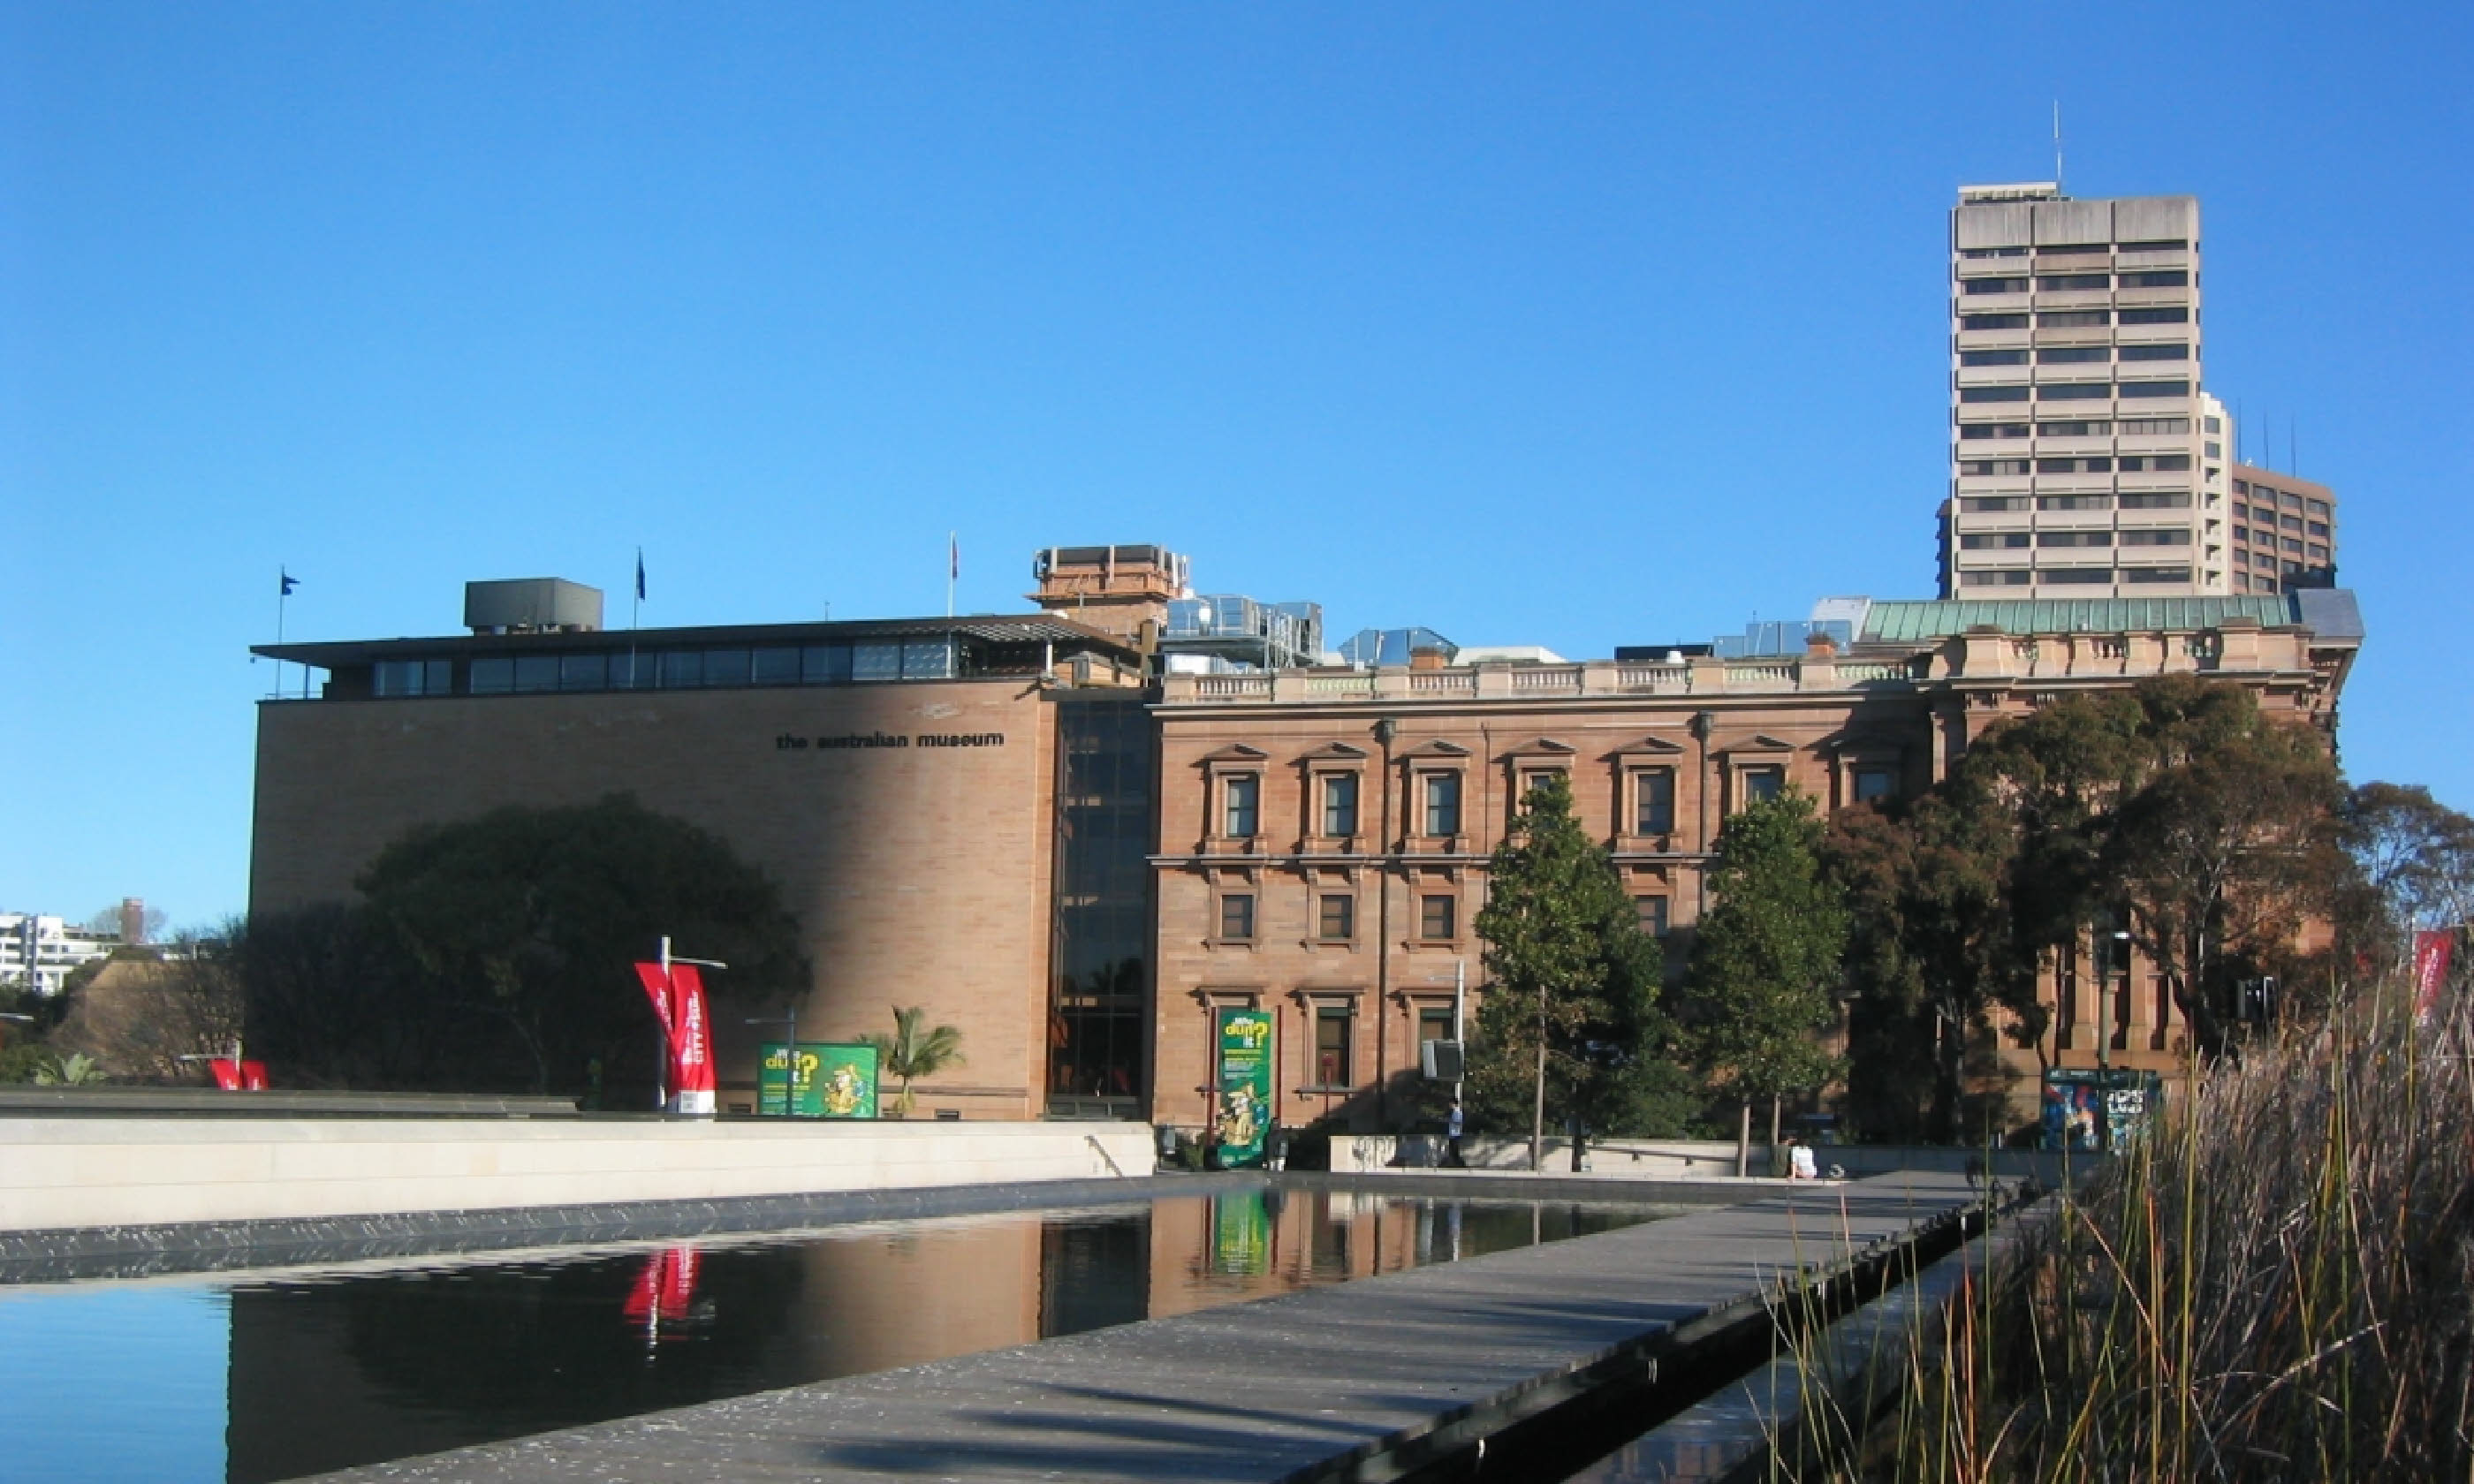 The Australian Museum (Shutterstock)